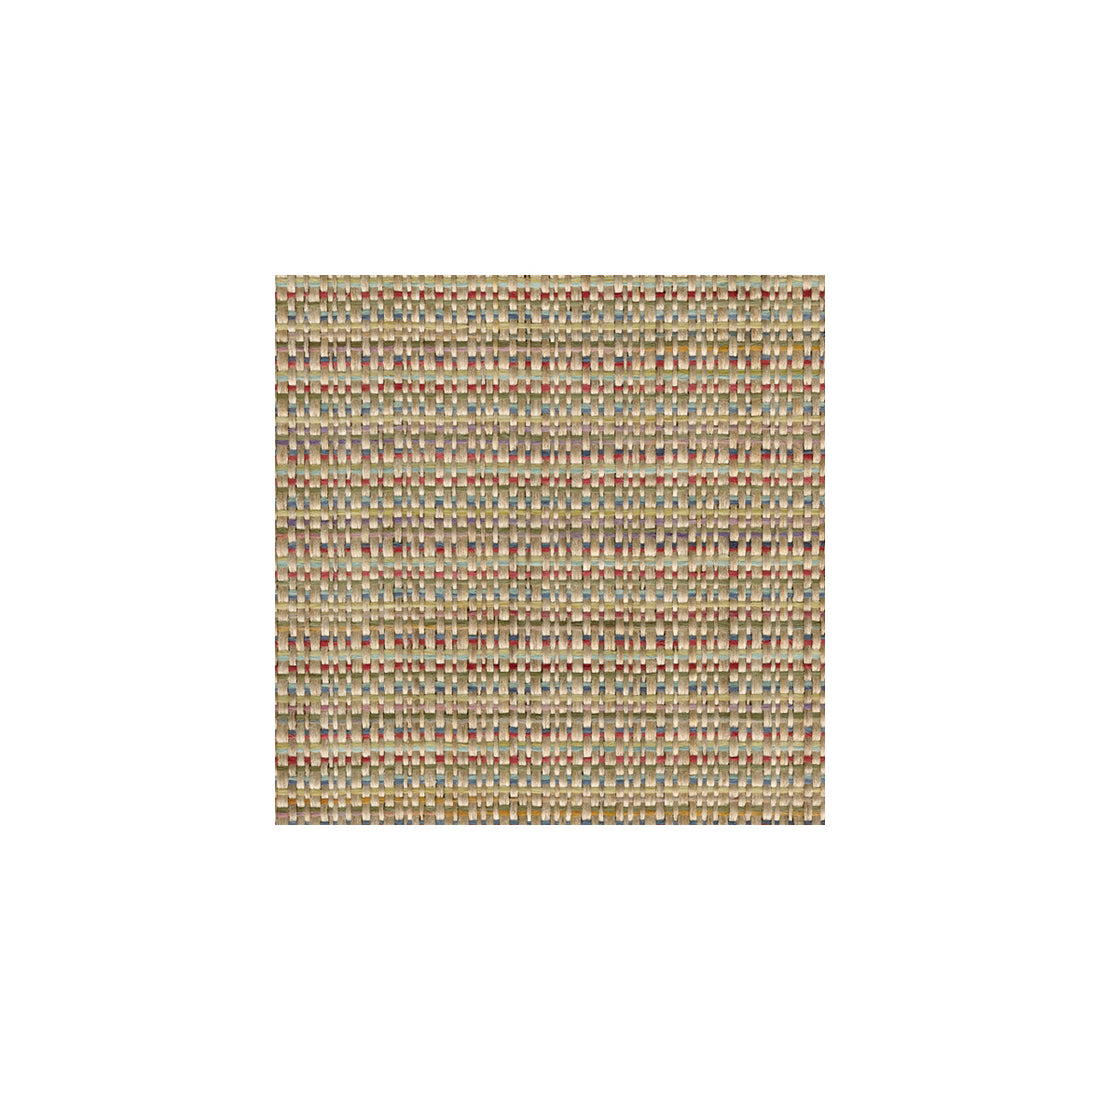 Kravet Smart fabric in 31757-519 color - pattern 31757.519.0 - by Kravet Smart